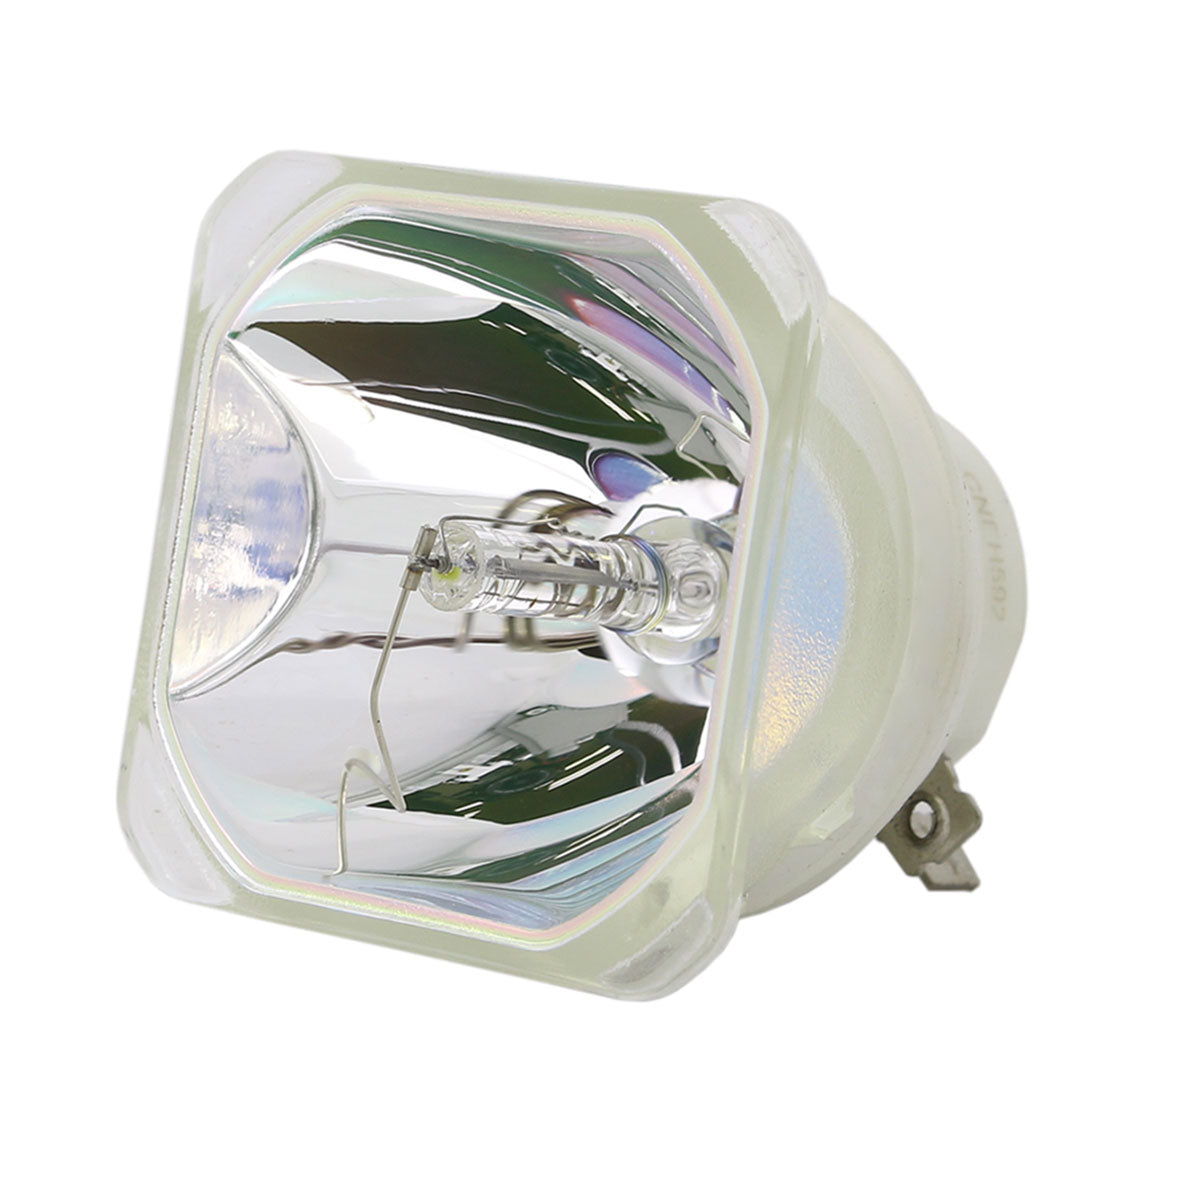 Planar 997-5353-00 Ushio Projector Bare Lamp